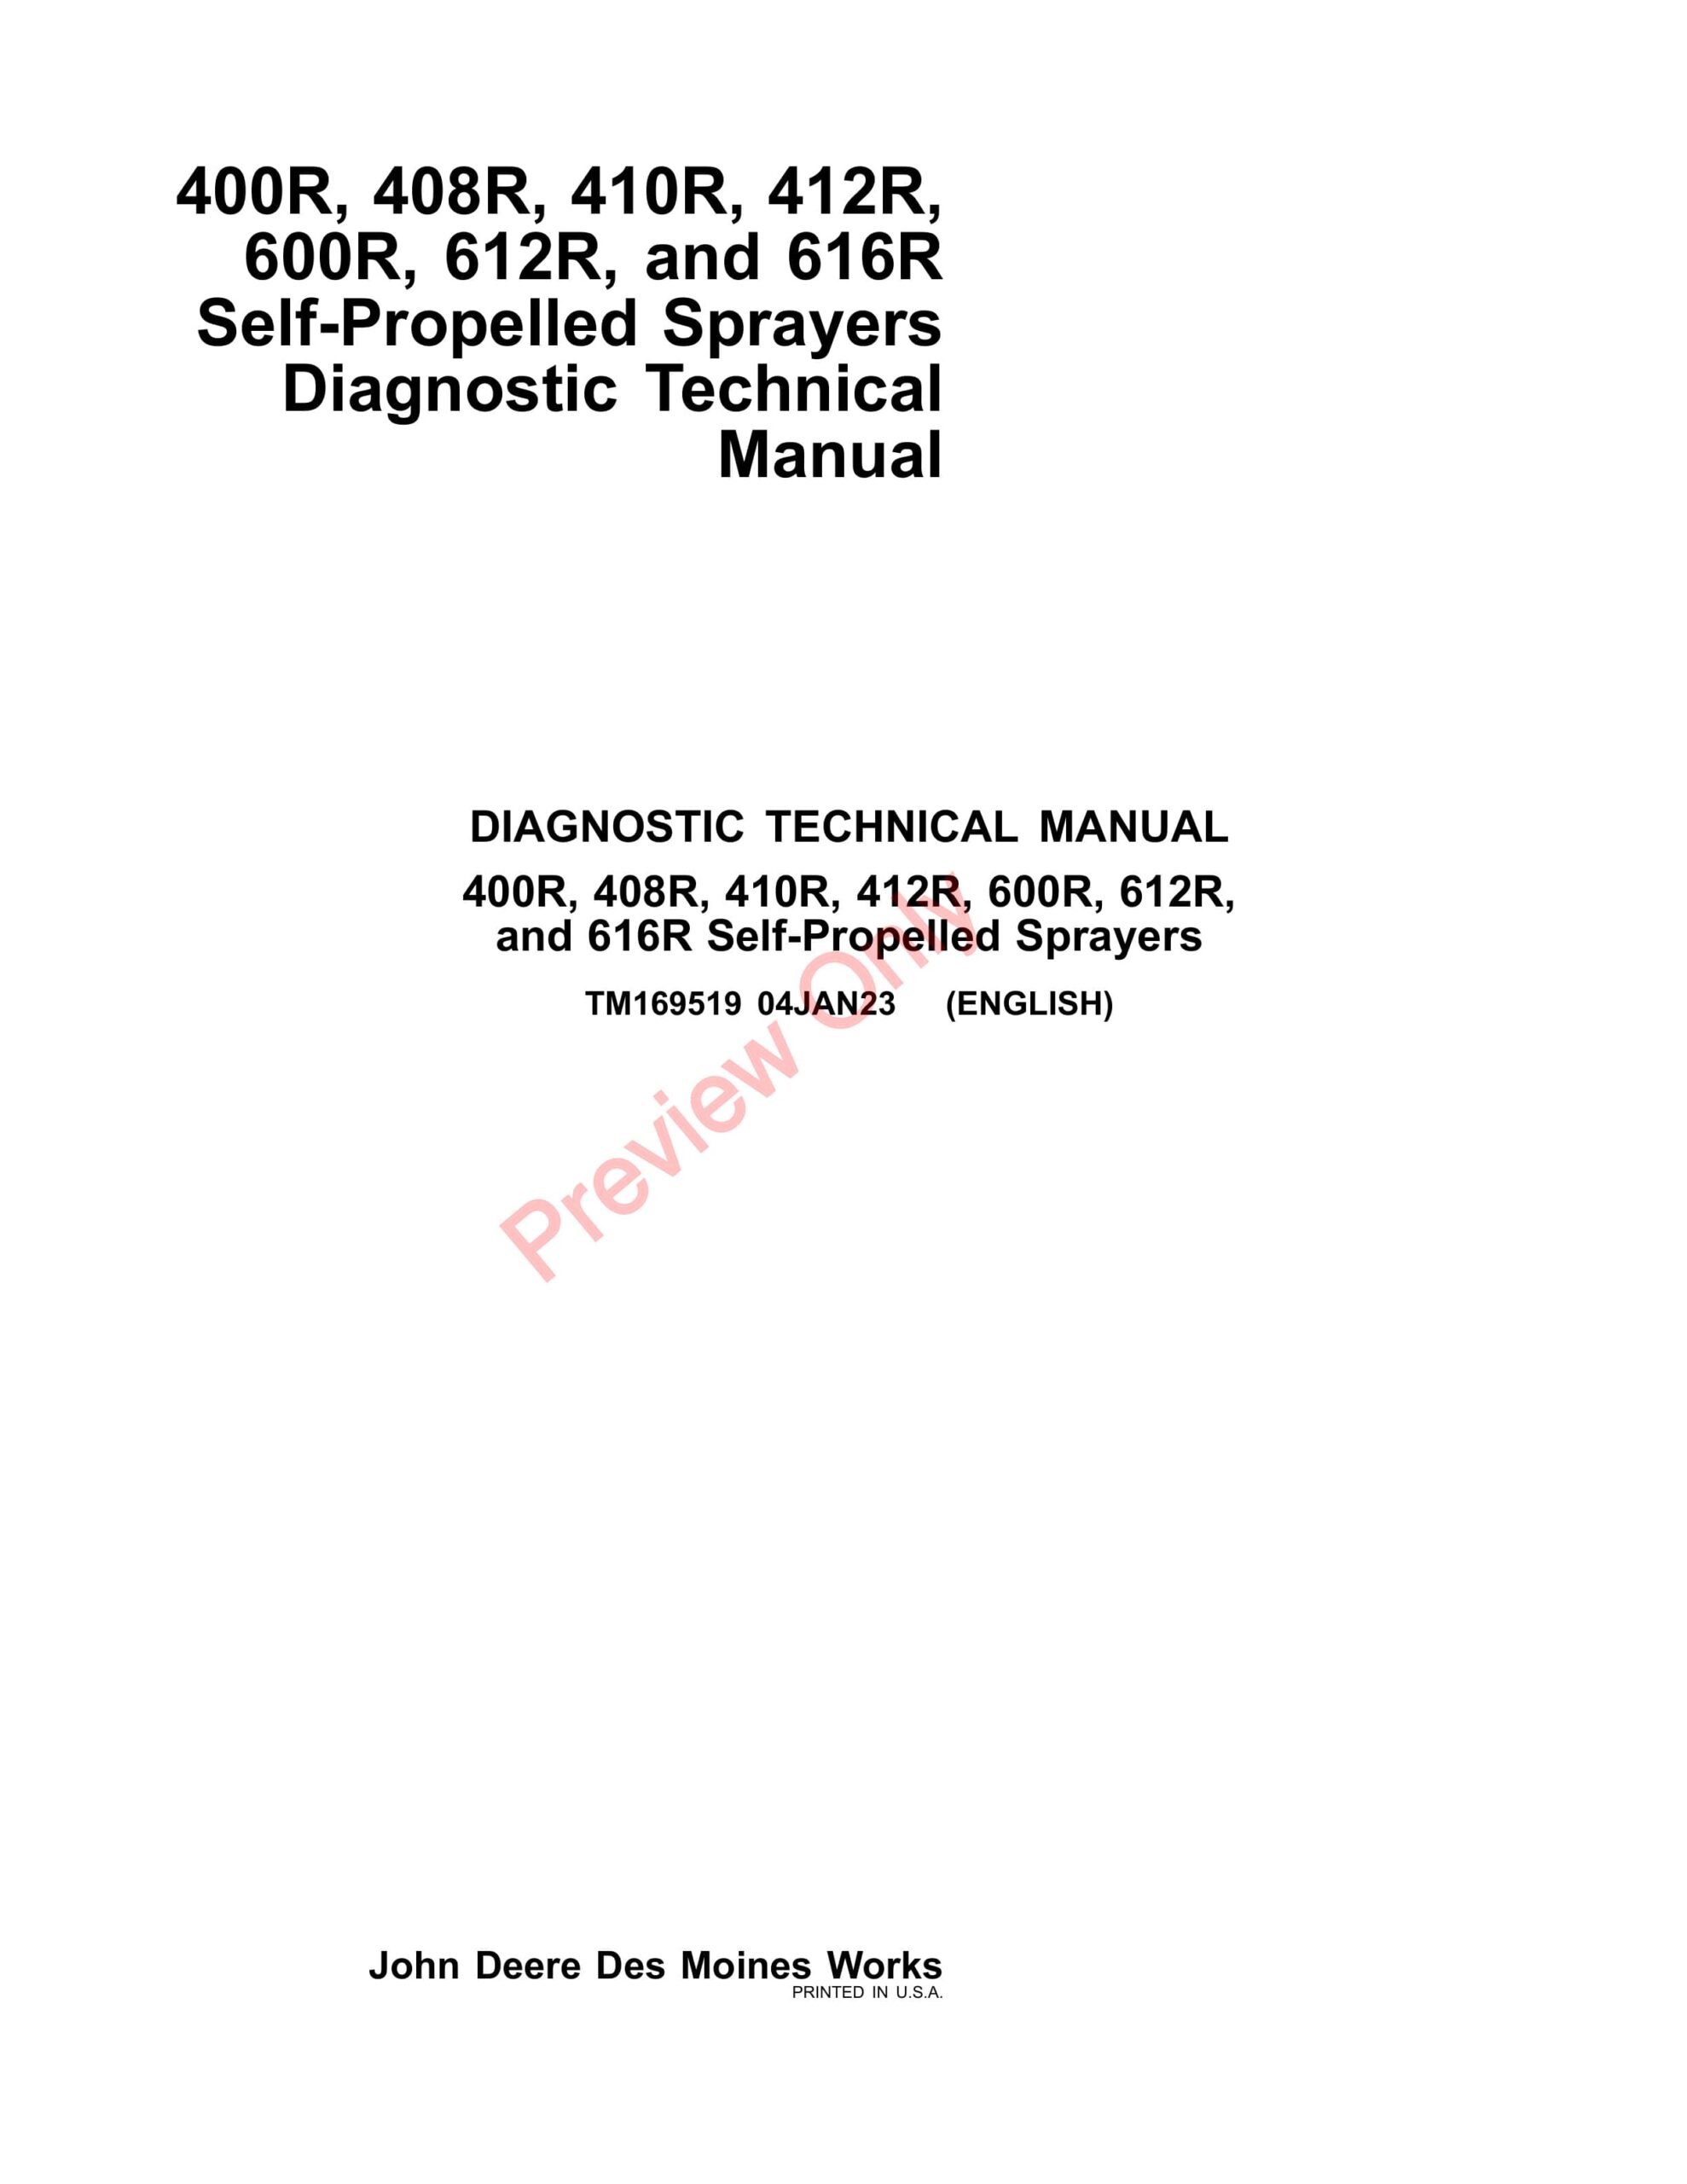 John Deere 400R and 600R Self-Propelled Sprayers Diagnostic Technical Manual TM169519 21MAR23-1